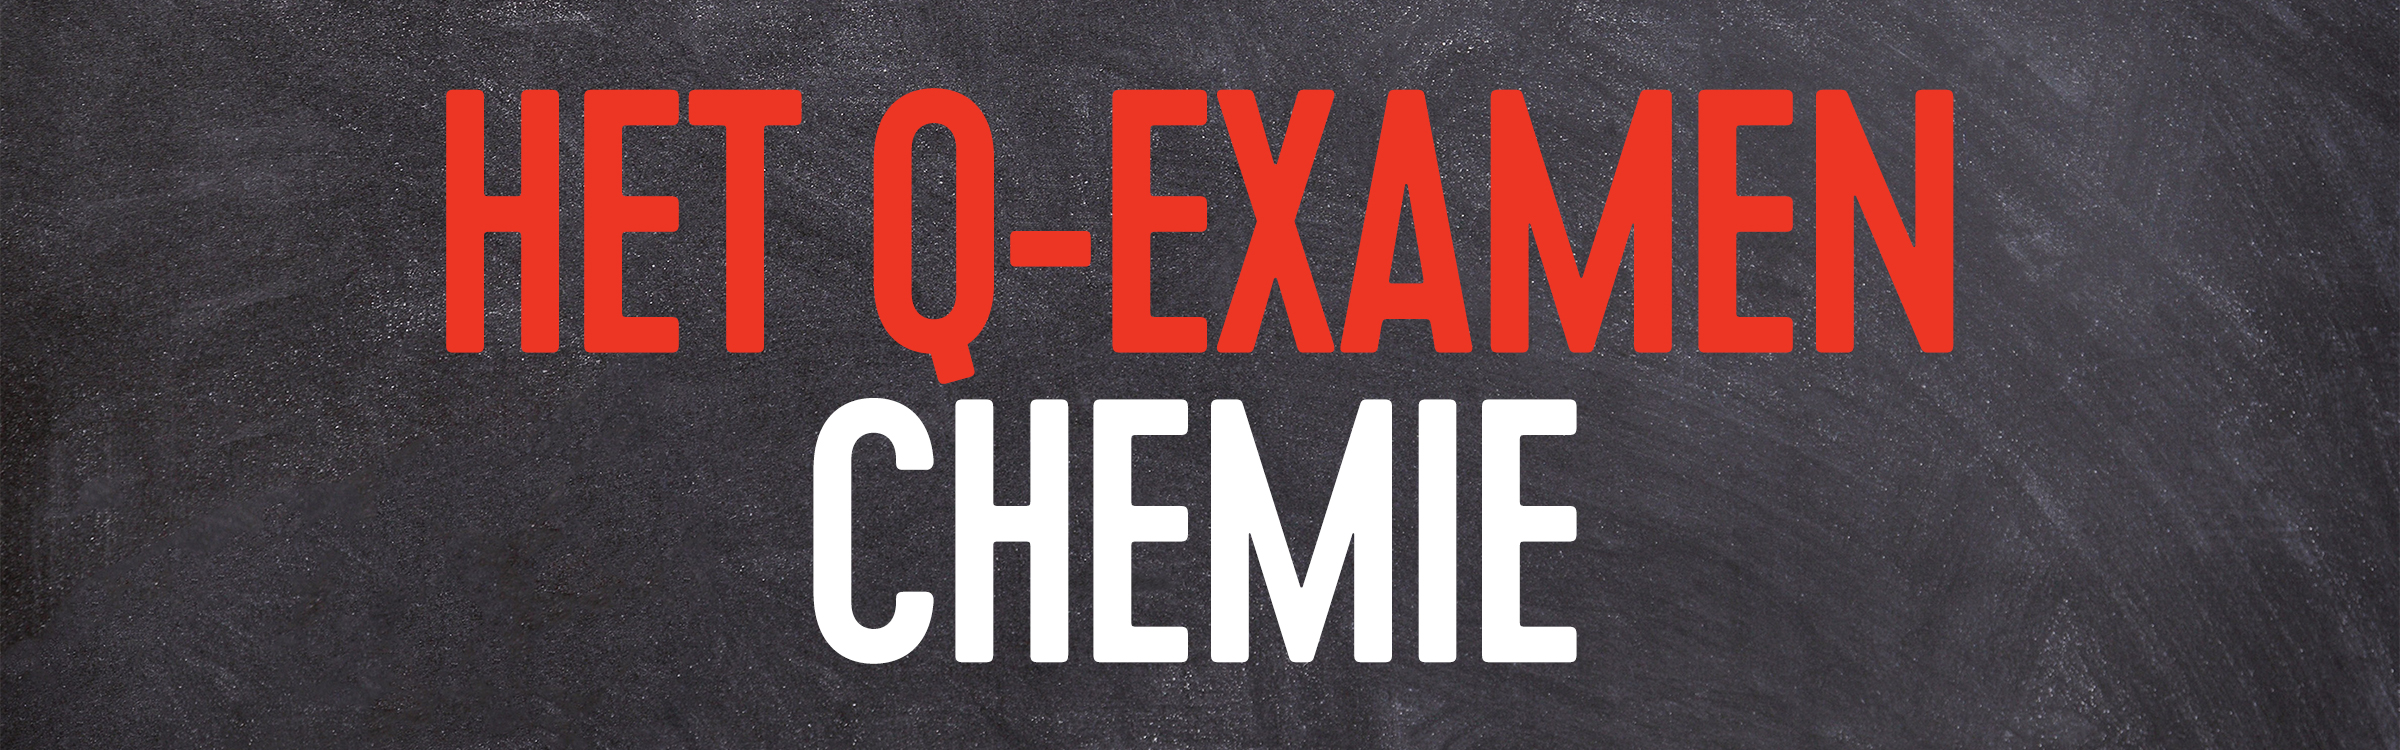 Q examen chemie header